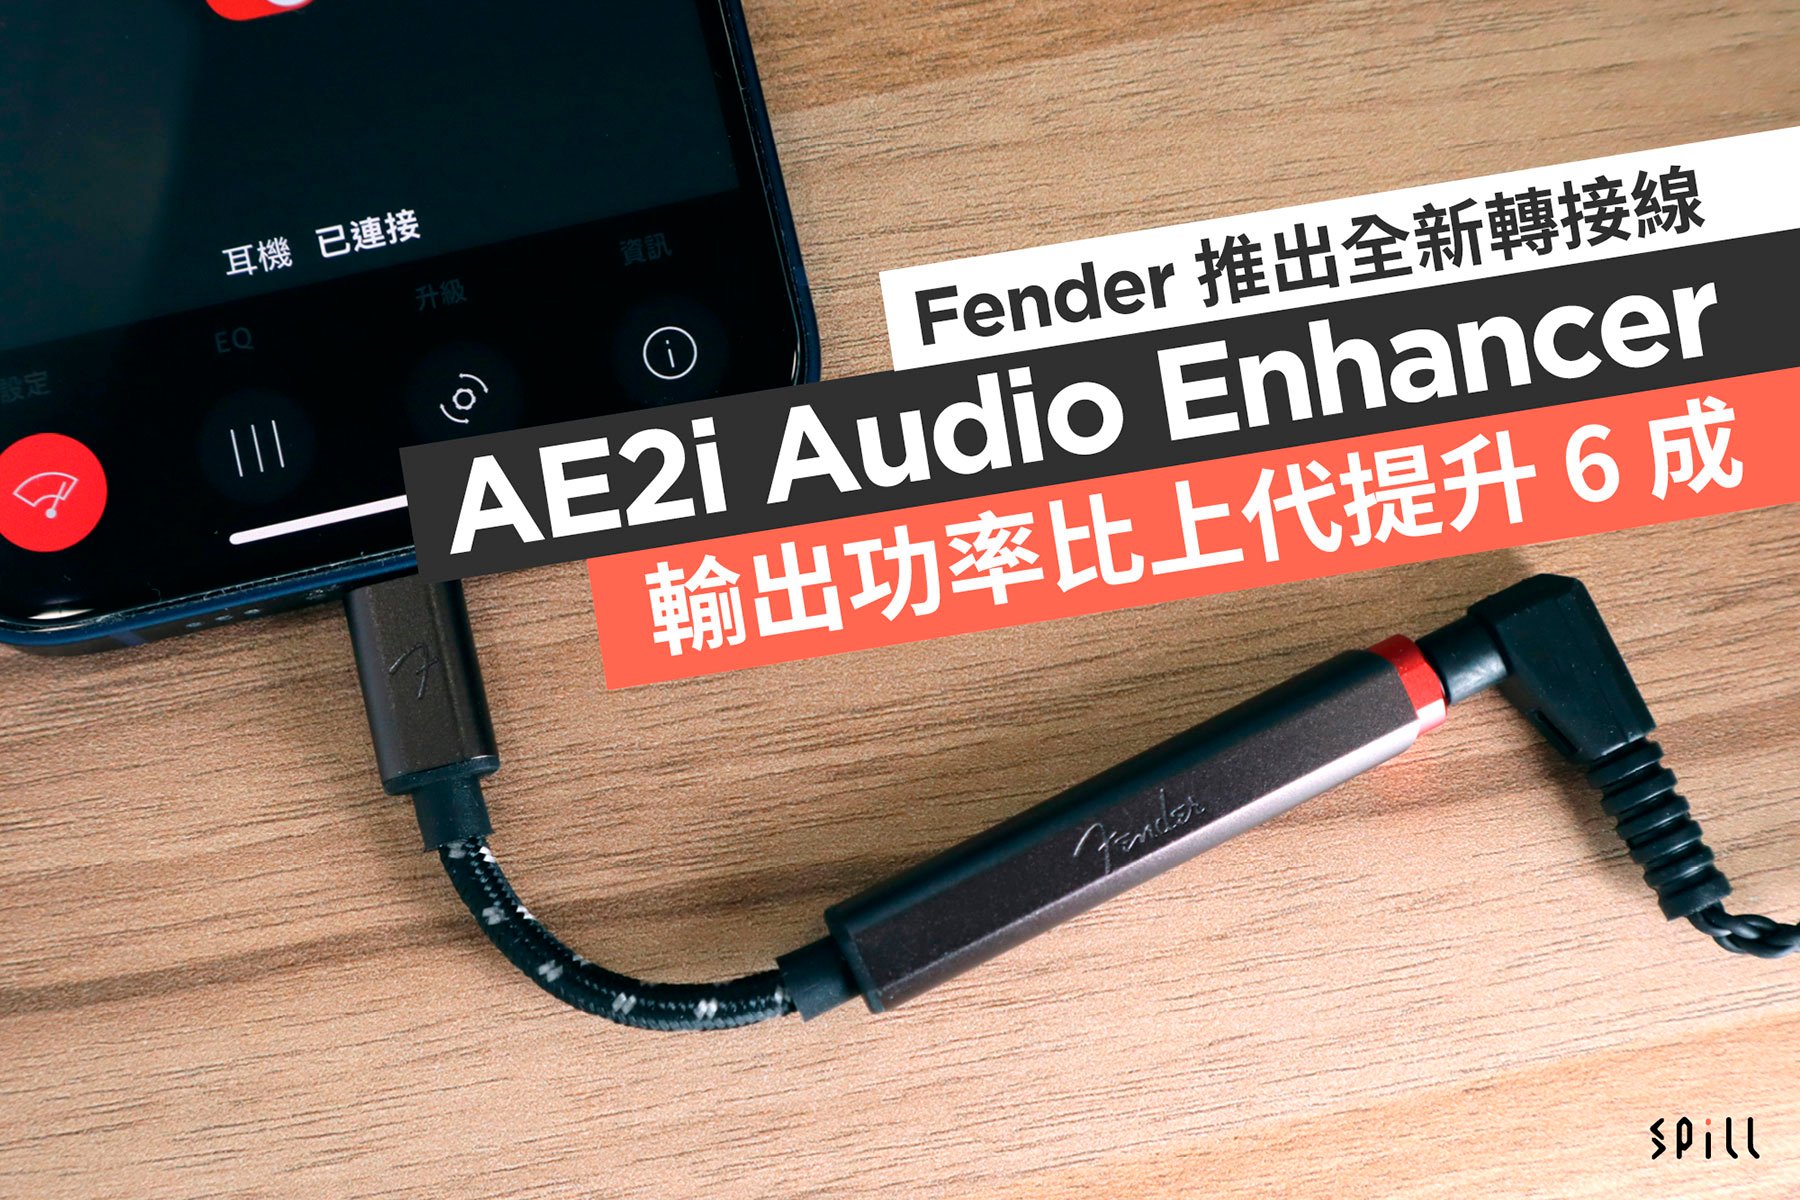 Fender 推出全新轉接線 AE2i Audio Enhancer　輸出功率比上代提升 6 成